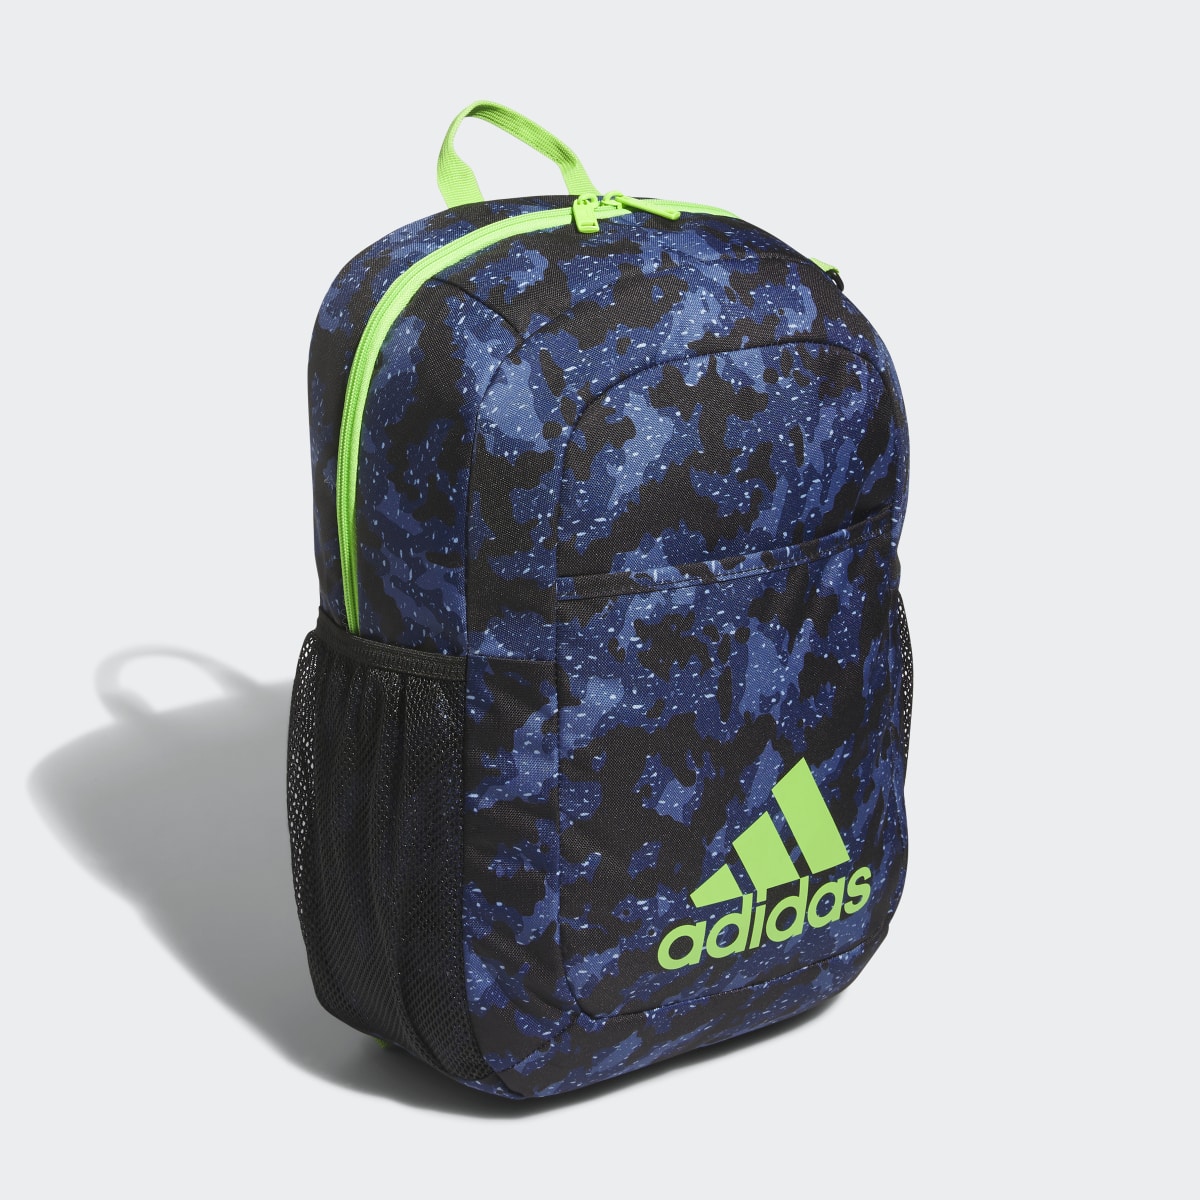 Adidas Ready Backpack. 4